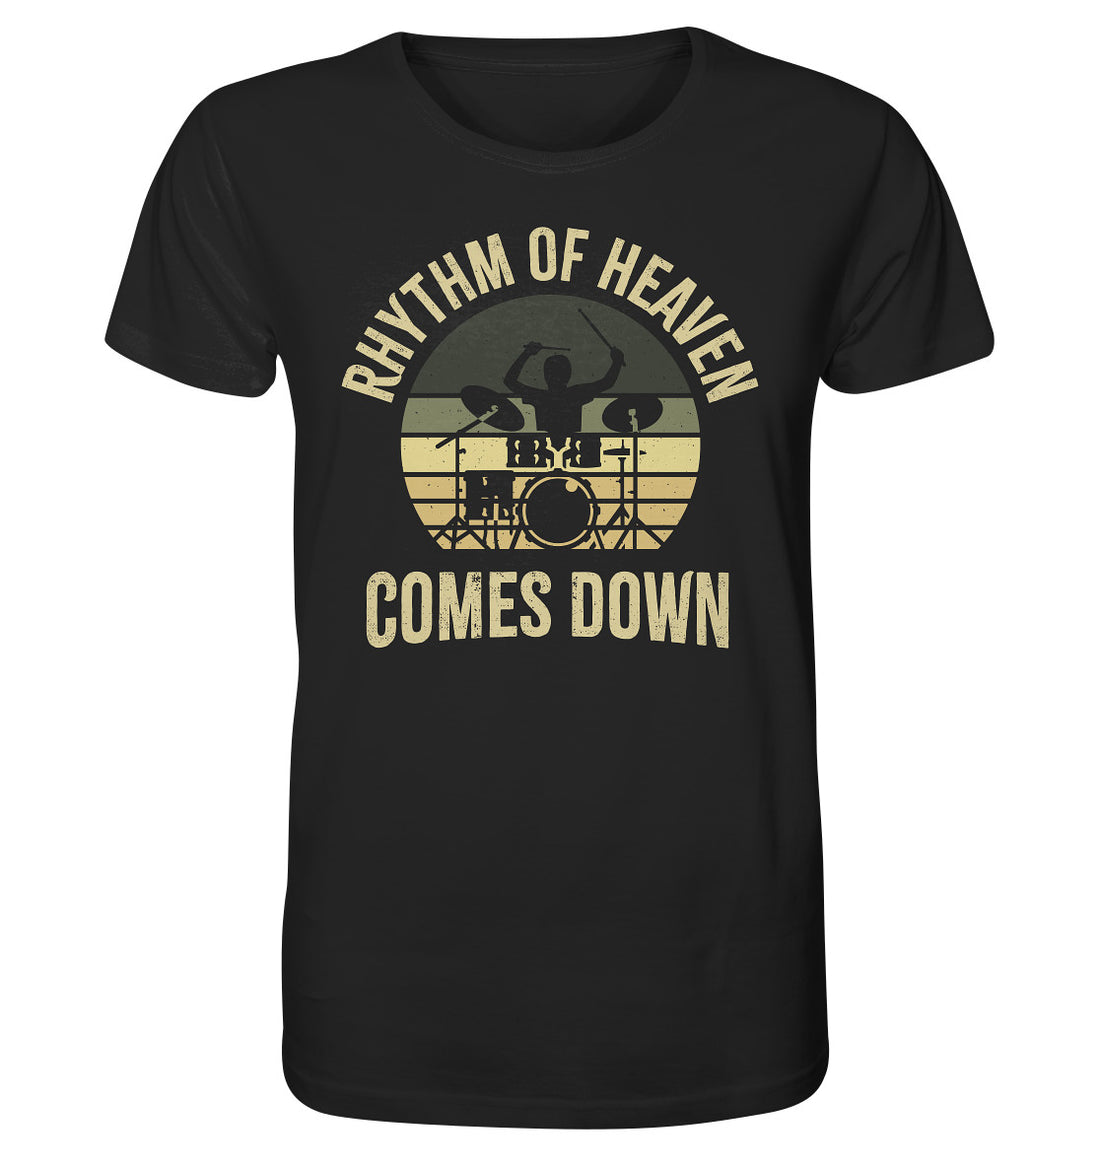 Rhythm of heaven - Organic Shirt